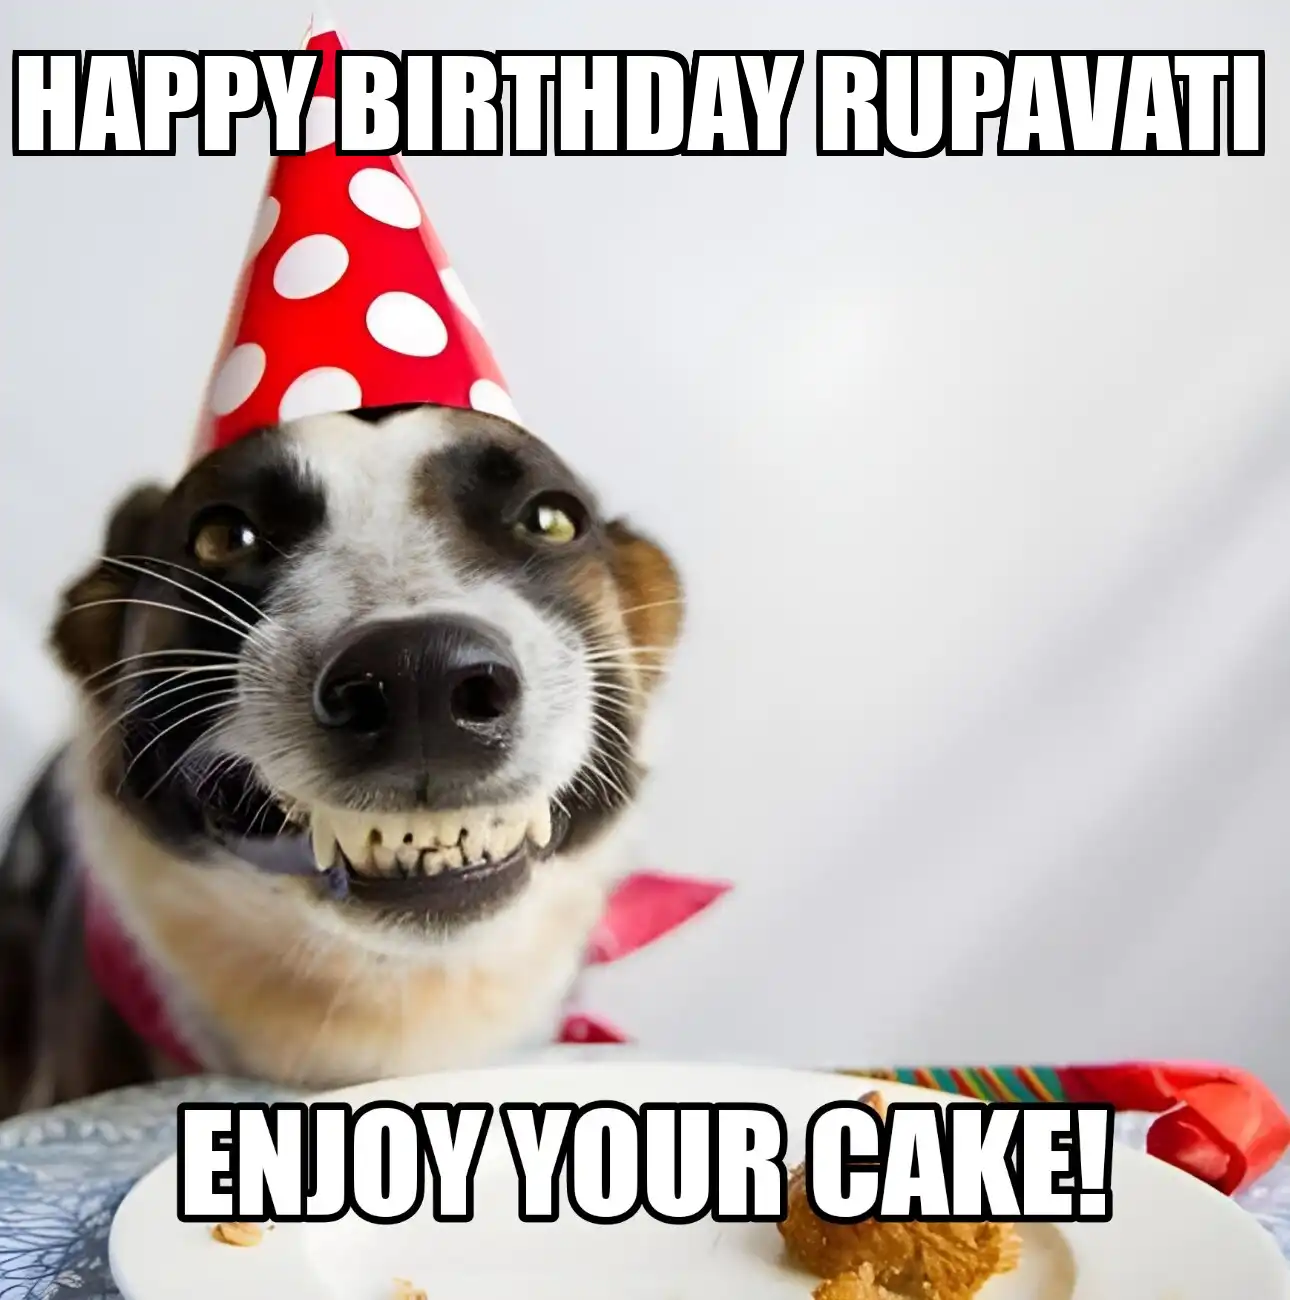 Happy Birthday Rupavati Enjoy Your Cake Dog Meme